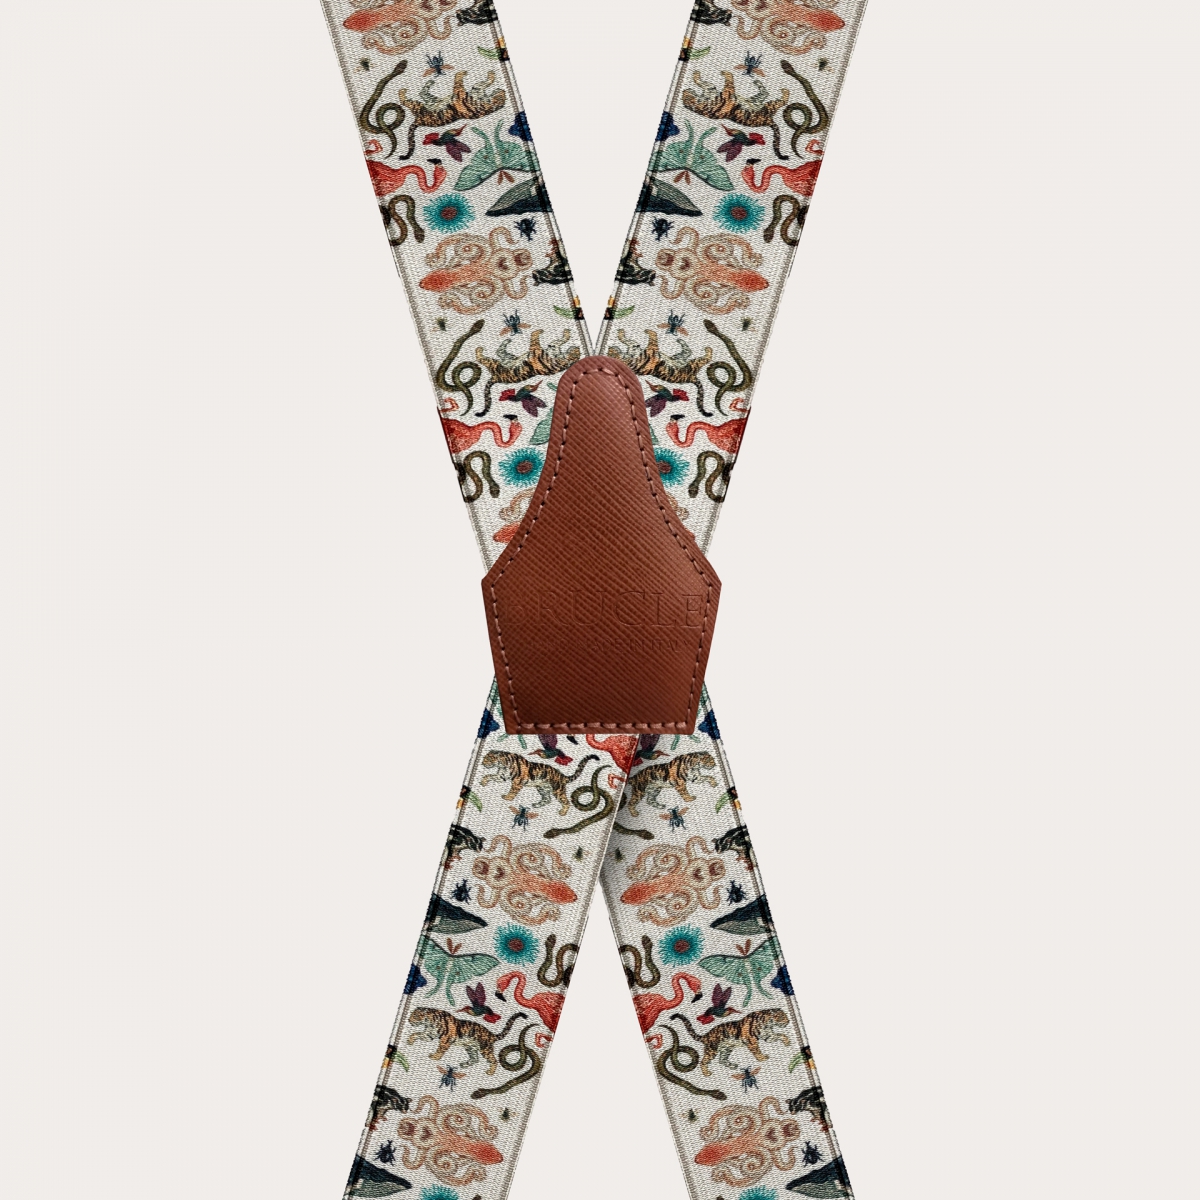 BRUCLE X-shape elastic satin suspenders, exotic animal pattern